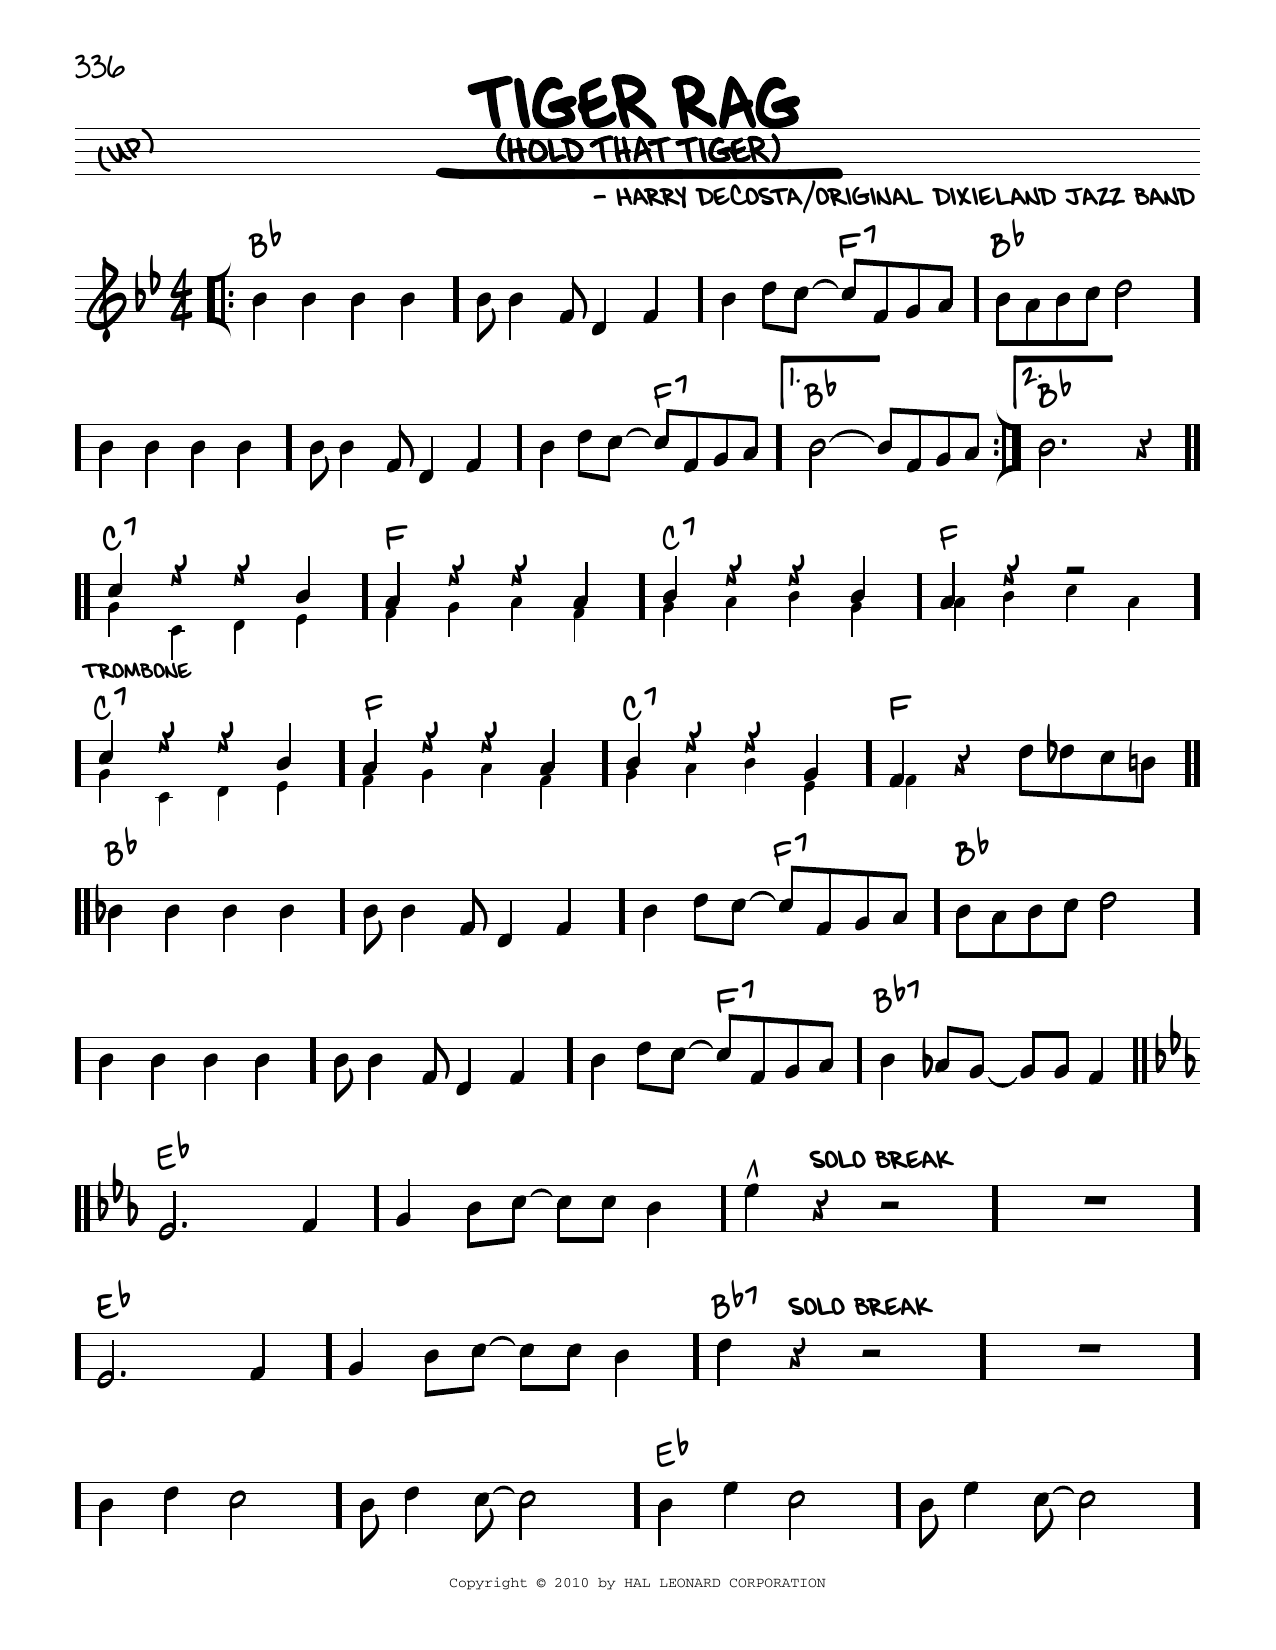 Original Dixieland Jazz Band Tiger Rag (Hold That Tiger) (arr. Robert Rawlins) sheet music notes and chords. Download Printable PDF.